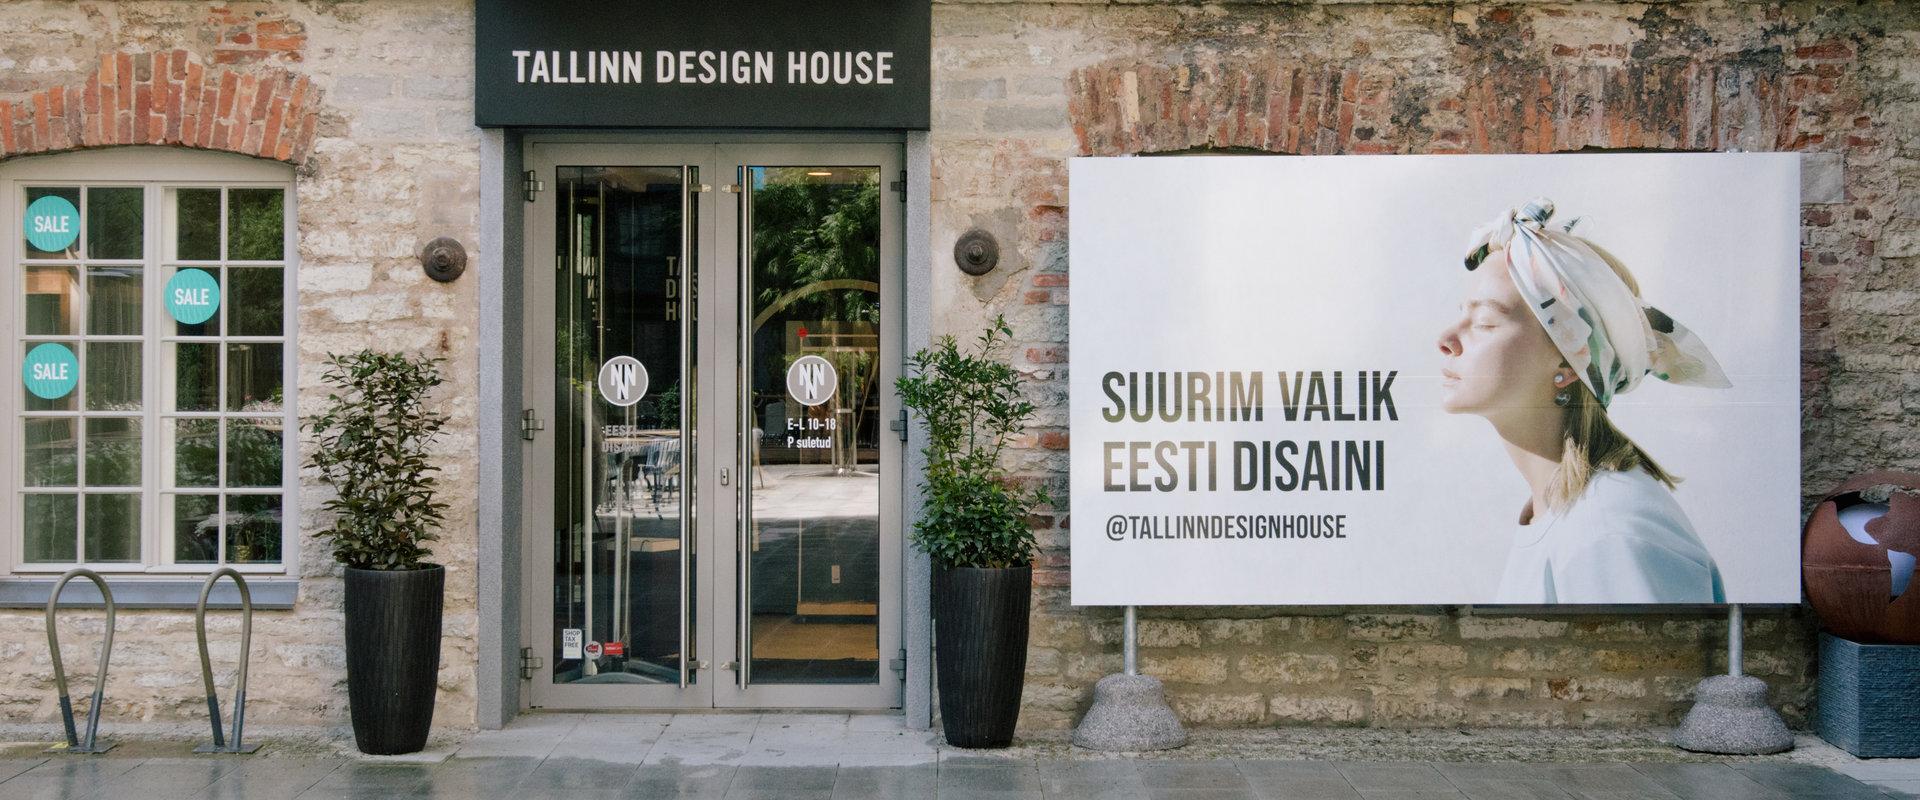 Tallinn Design House - Eesti Disaini esindusruum